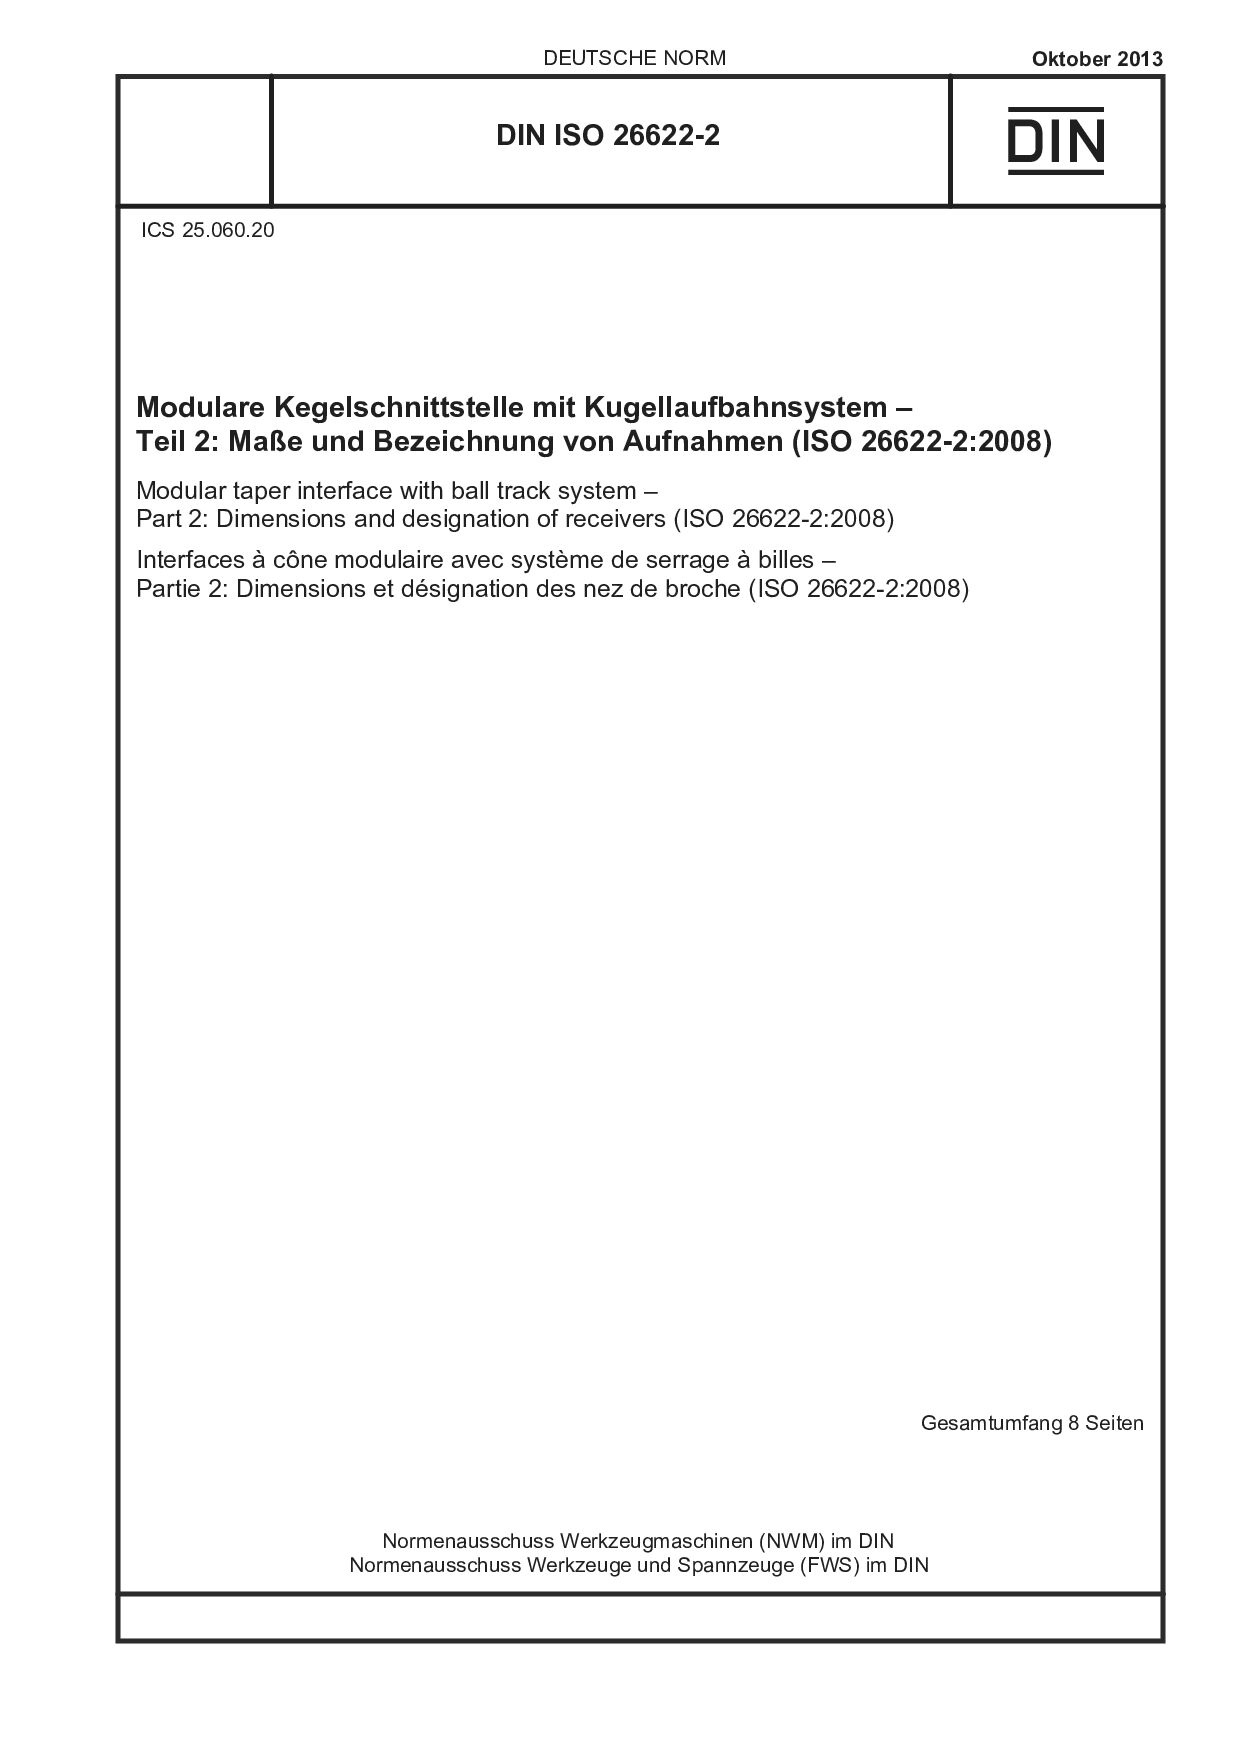 DIN ISO 26622-2:2013